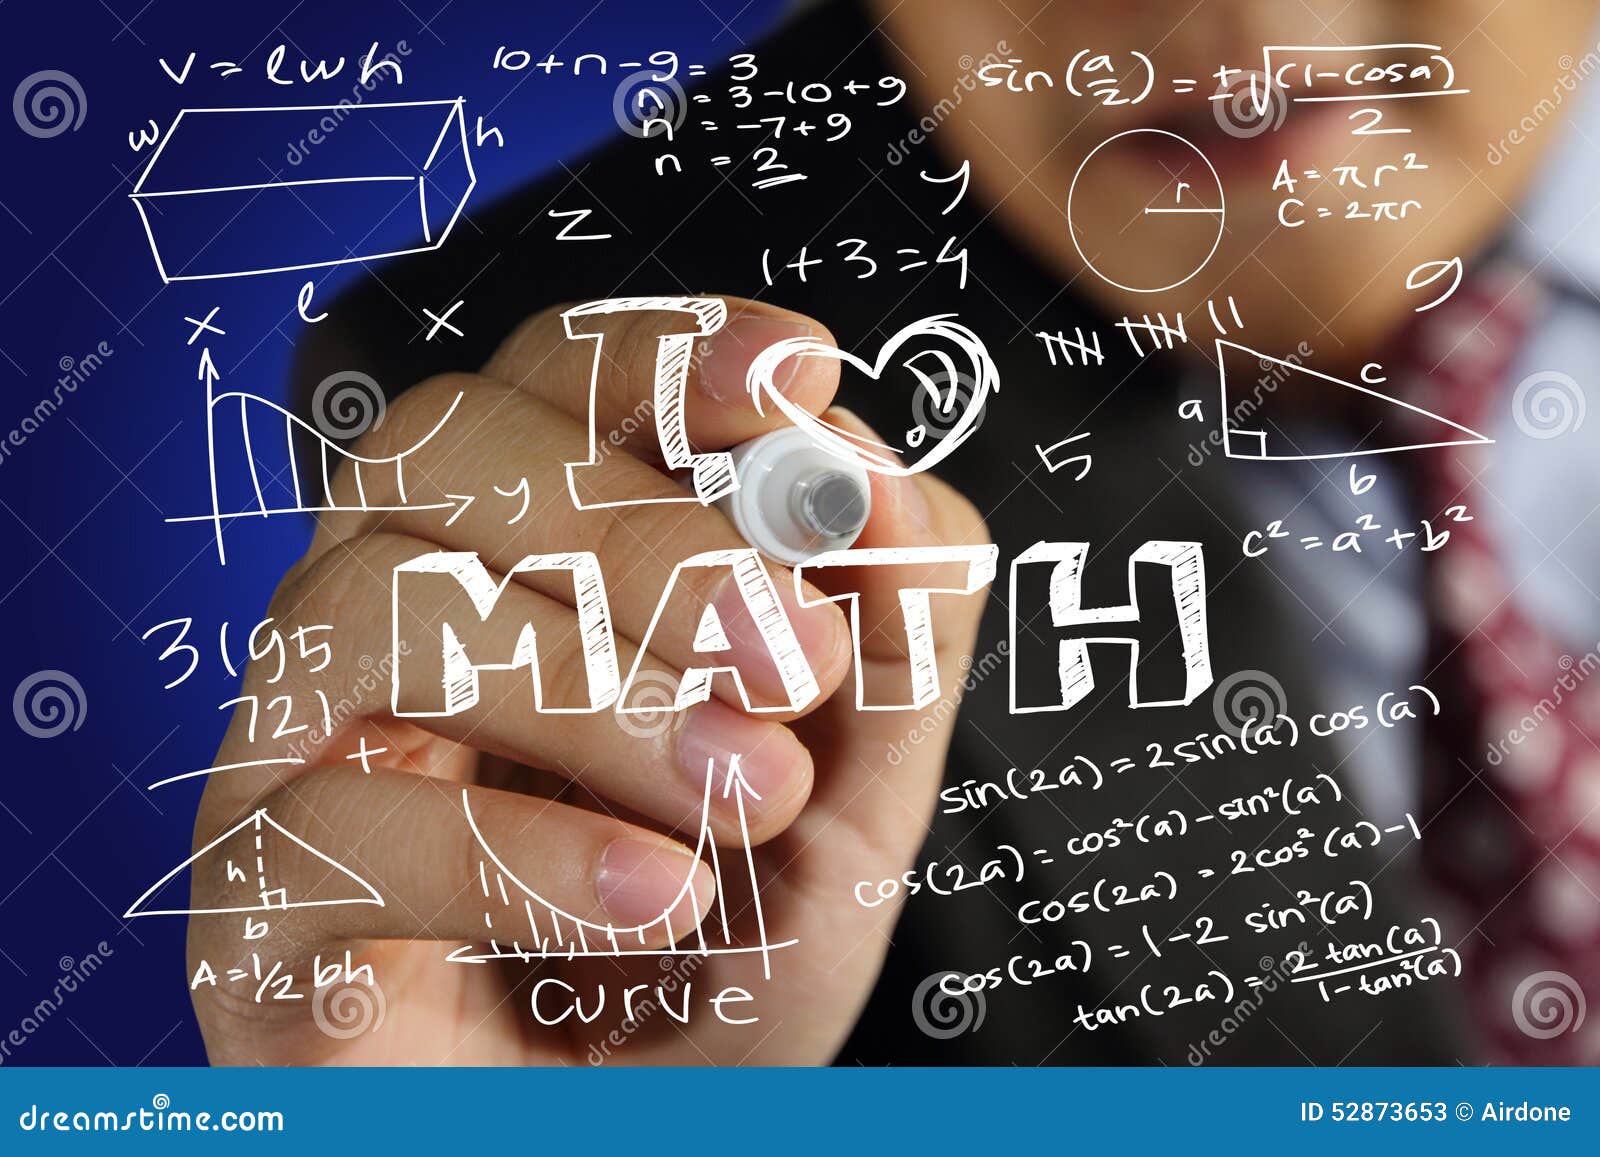 Я люблю математику картинки. Я люблю математику надпись. Фото я люблю математику. Полюбила математику.